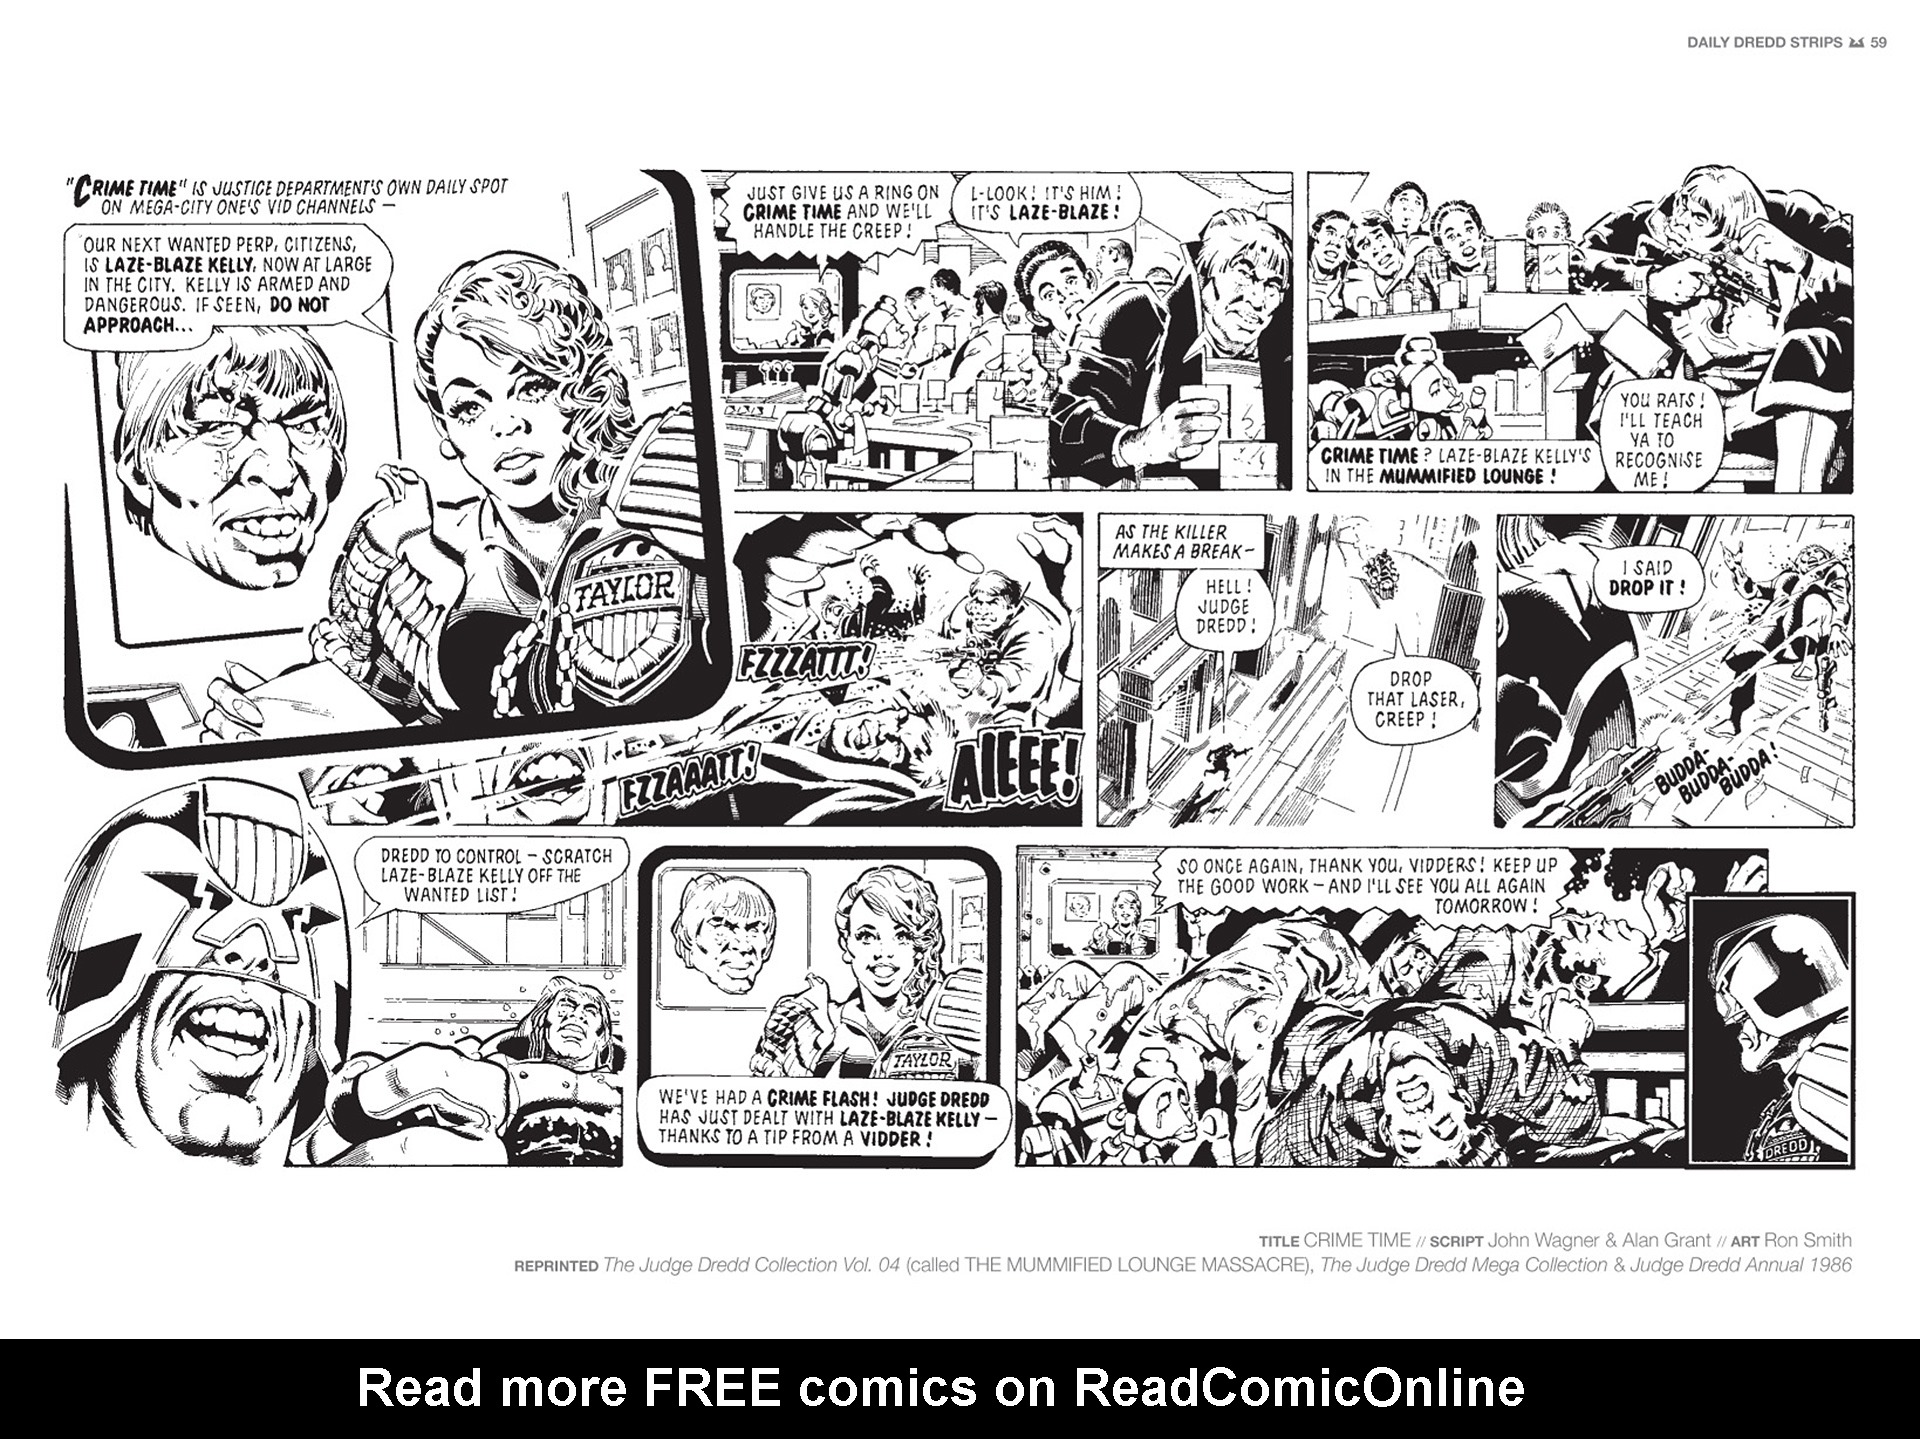 Read online Judge Dredd: The Daily Dredds comic -  Issue # TPB 1 - 62